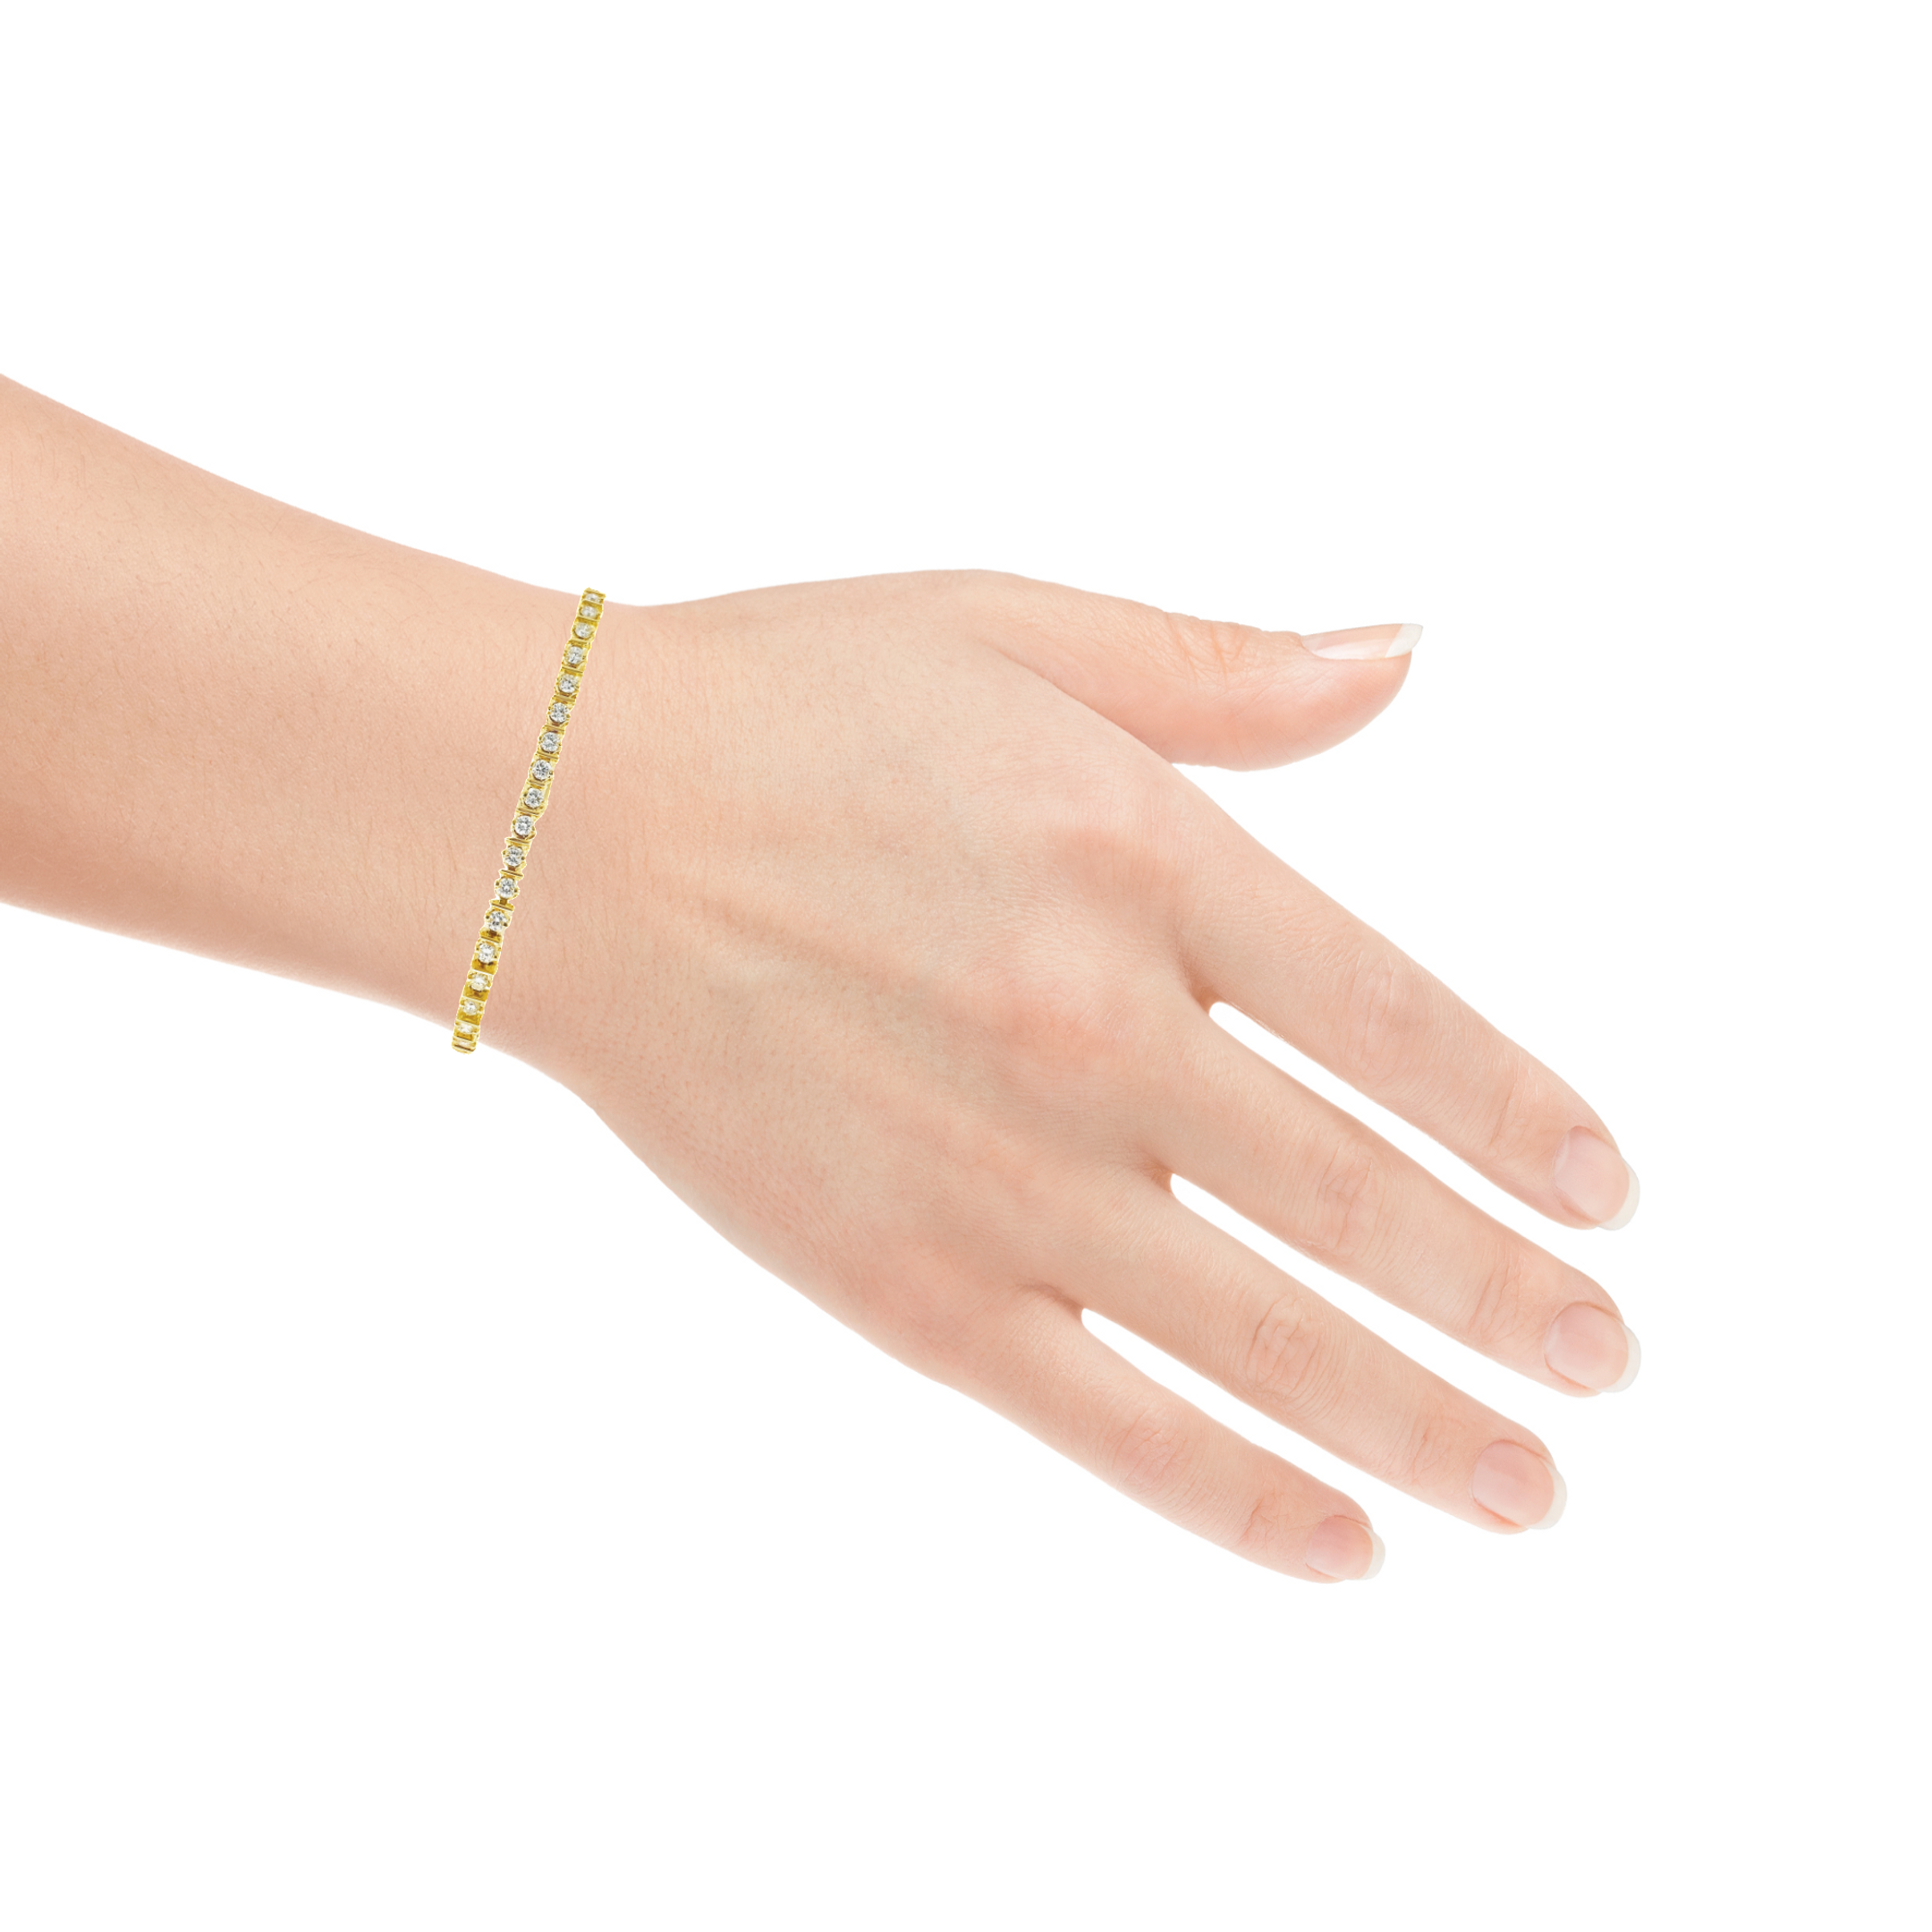 18K Yellow Gold 3.22 CTW Diamond Tennis Bracelet